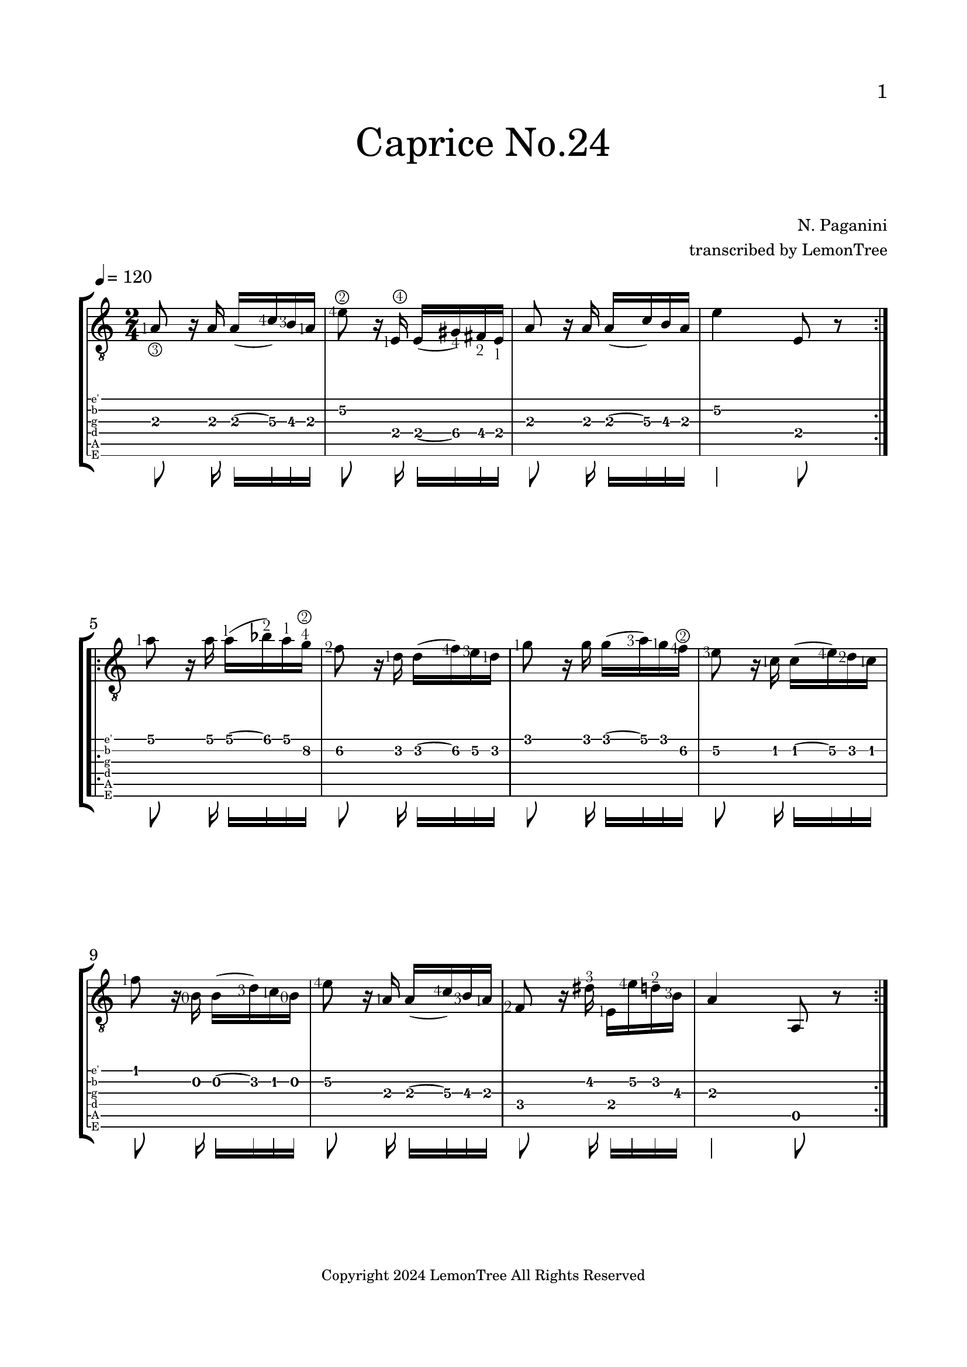 Niccolò Paganini - Caprice No.24 by LemonTree